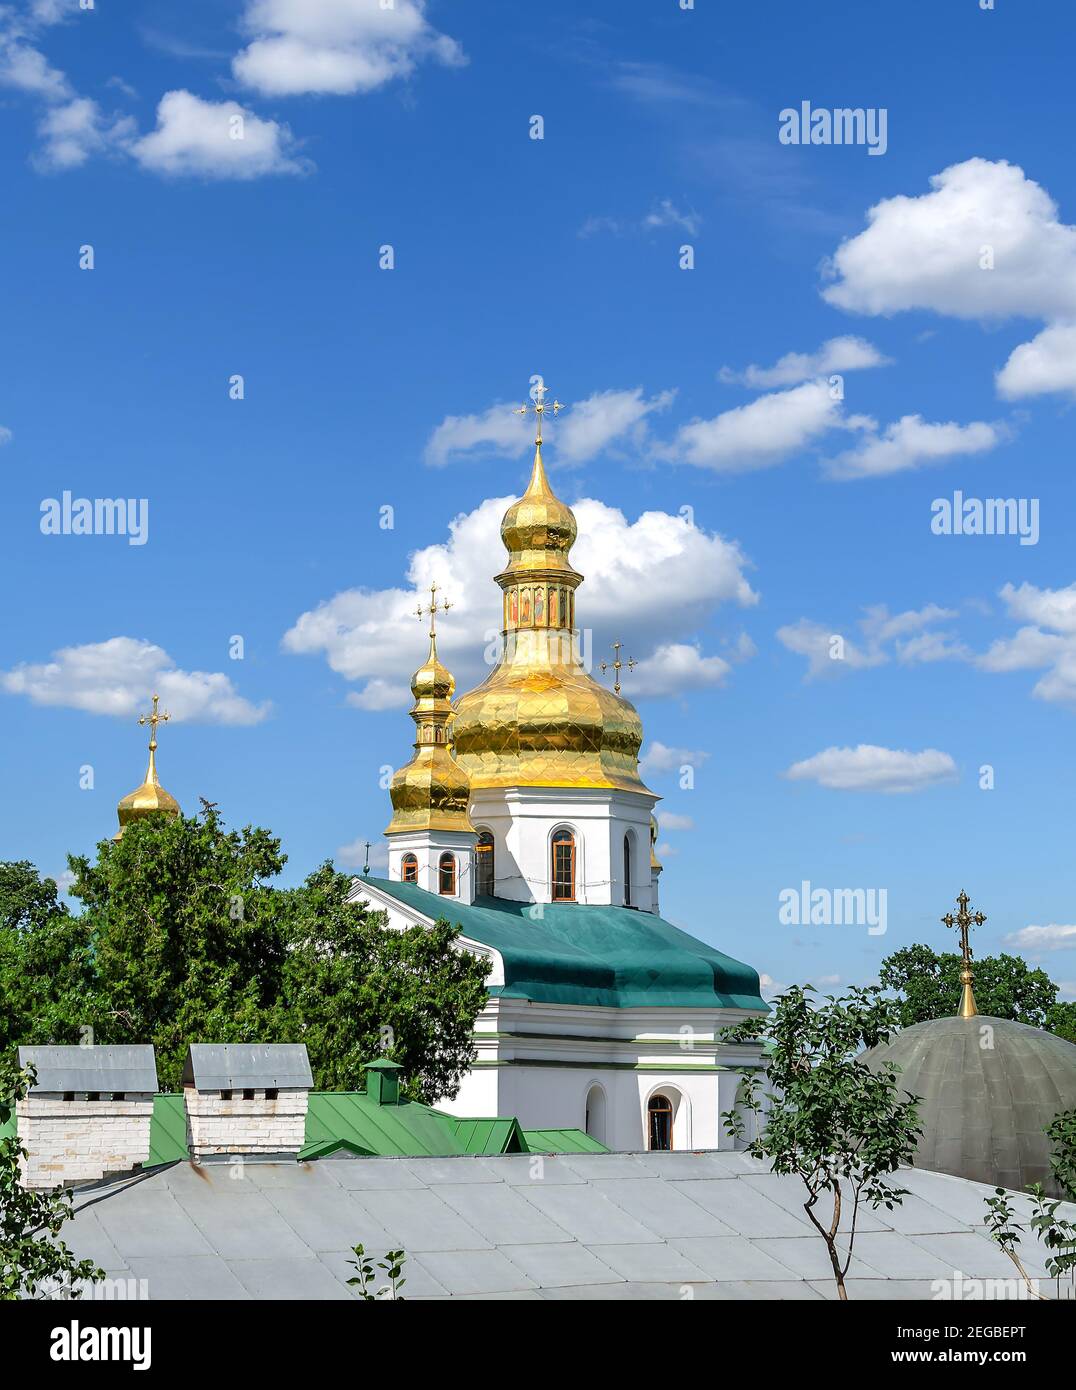 Orthodox church with golden domes, warm summer day Ukraine, Kiev Stock Photo